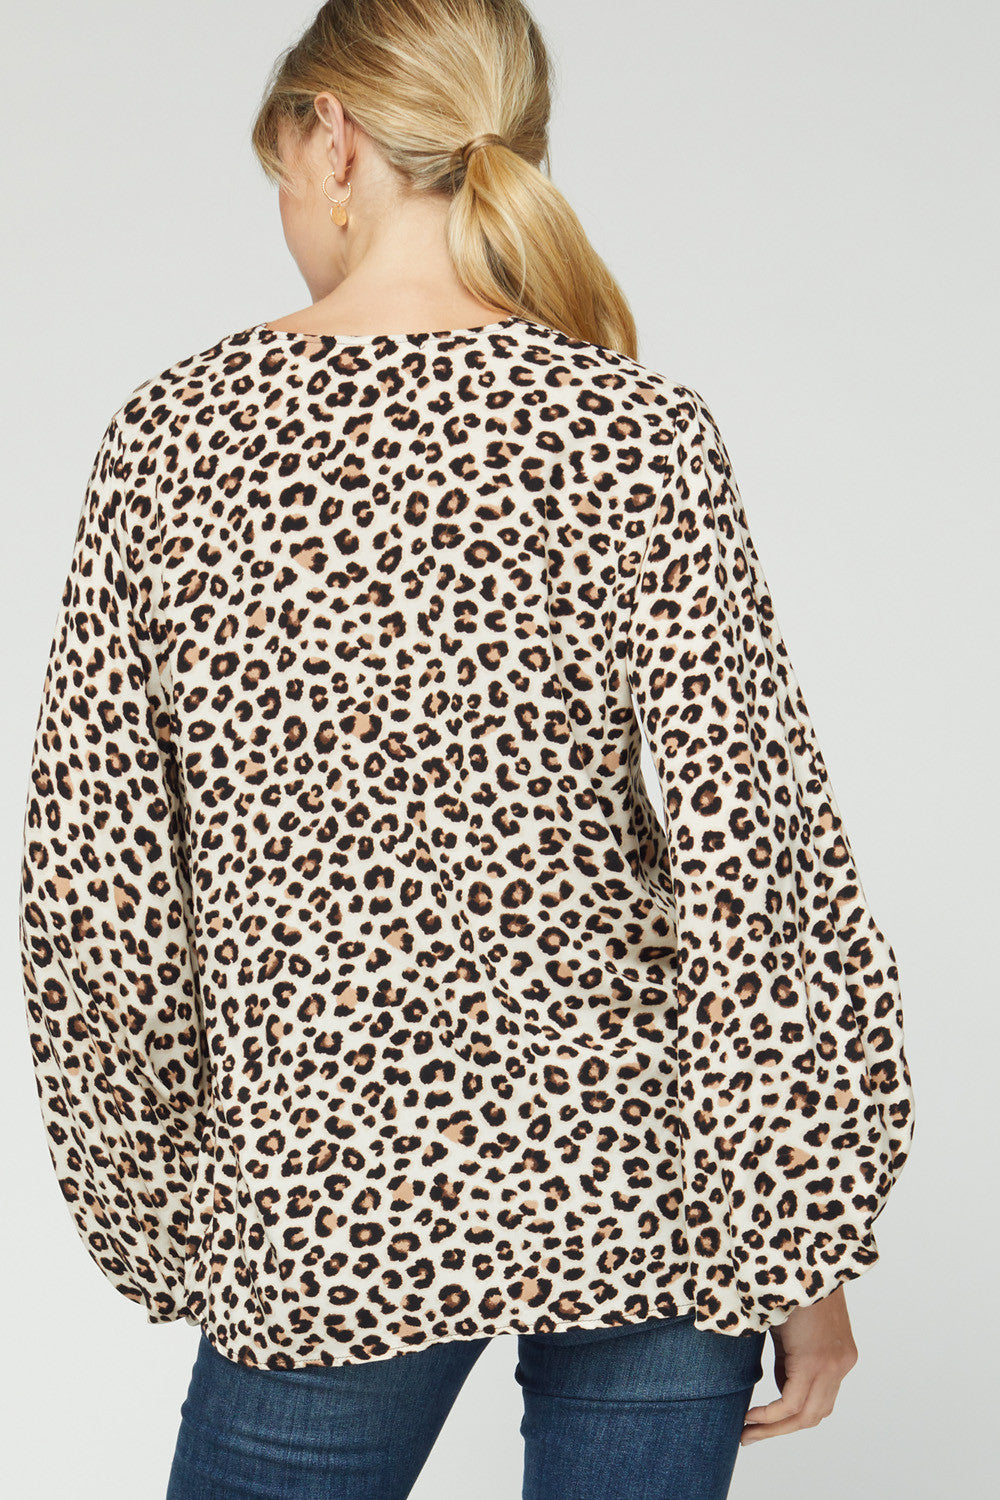 Leopard Print Top w/Puff Sleeves